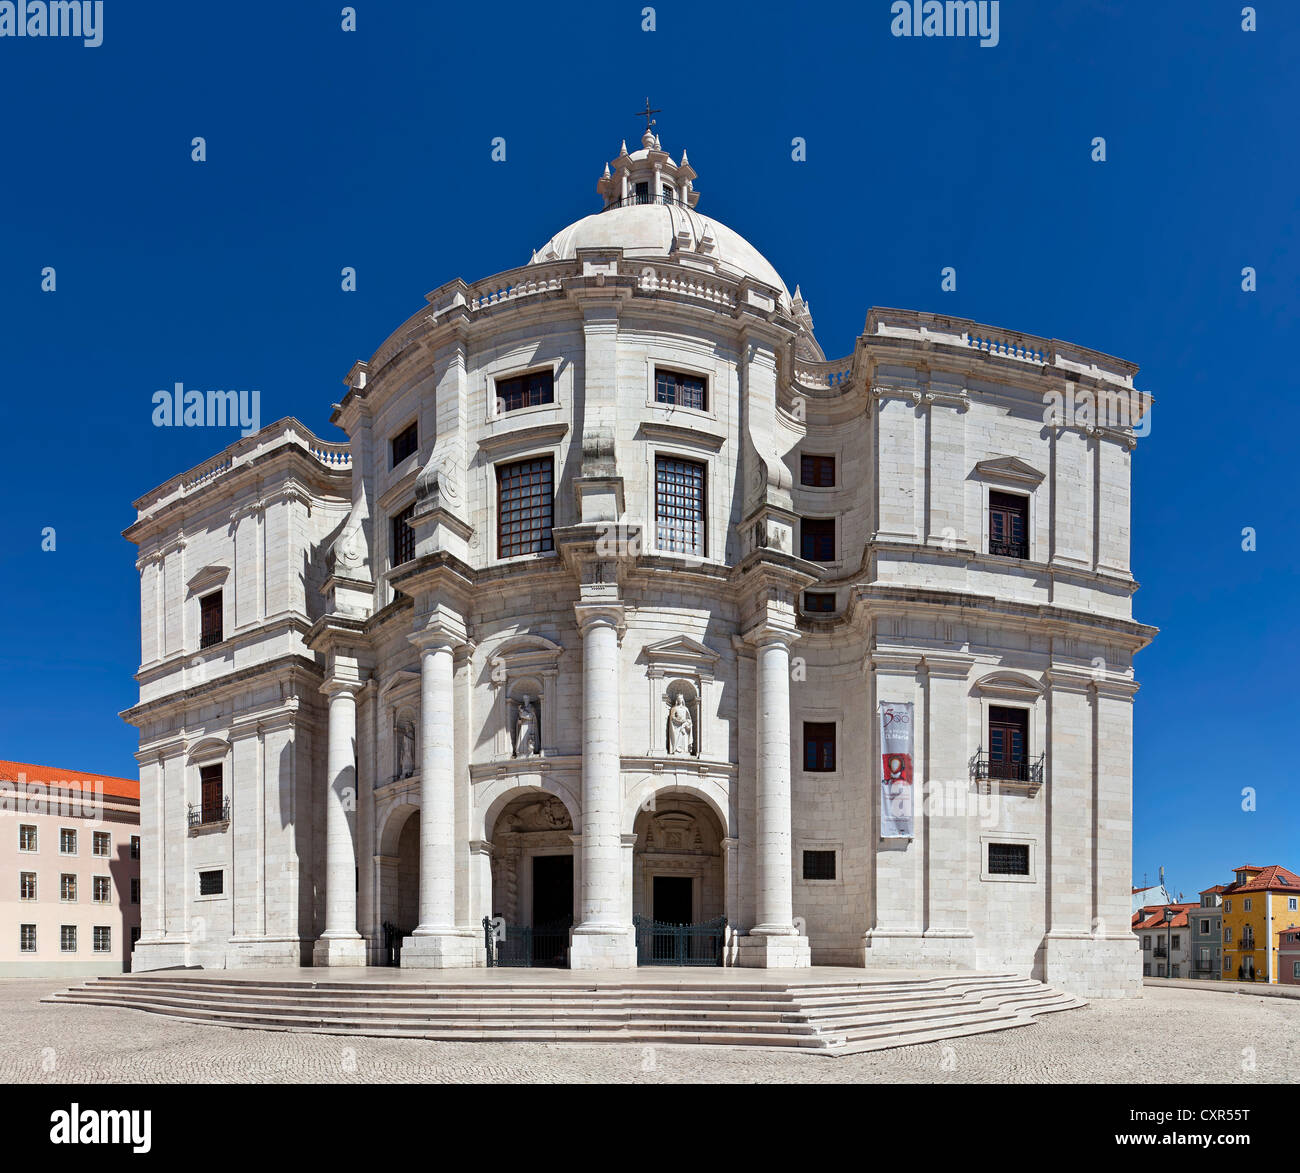 Santa Engrácia Chiesa, meglio noto come Pantheon Nazionale (Panteão Nacional). Lisbona, Portogallo. Architettura barocca seicentesca Foto Stock